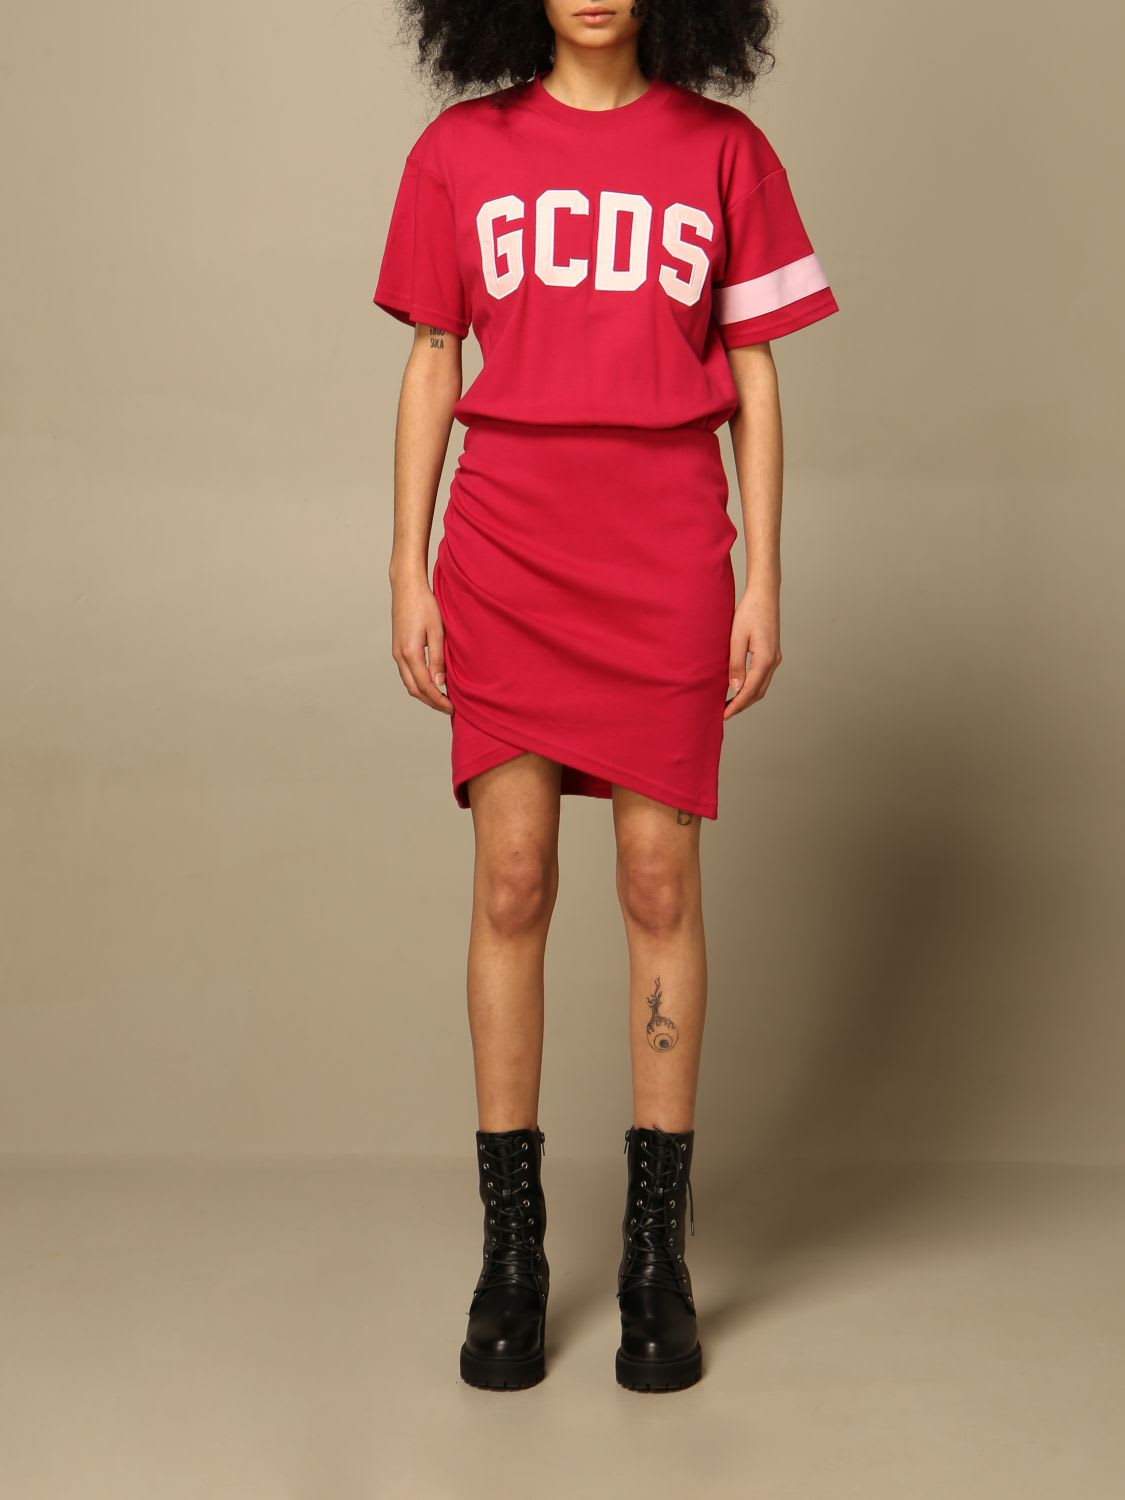 Gcds Dresses GCDS DRESS GCDS COTTON DRESS WITH BIG LOGO